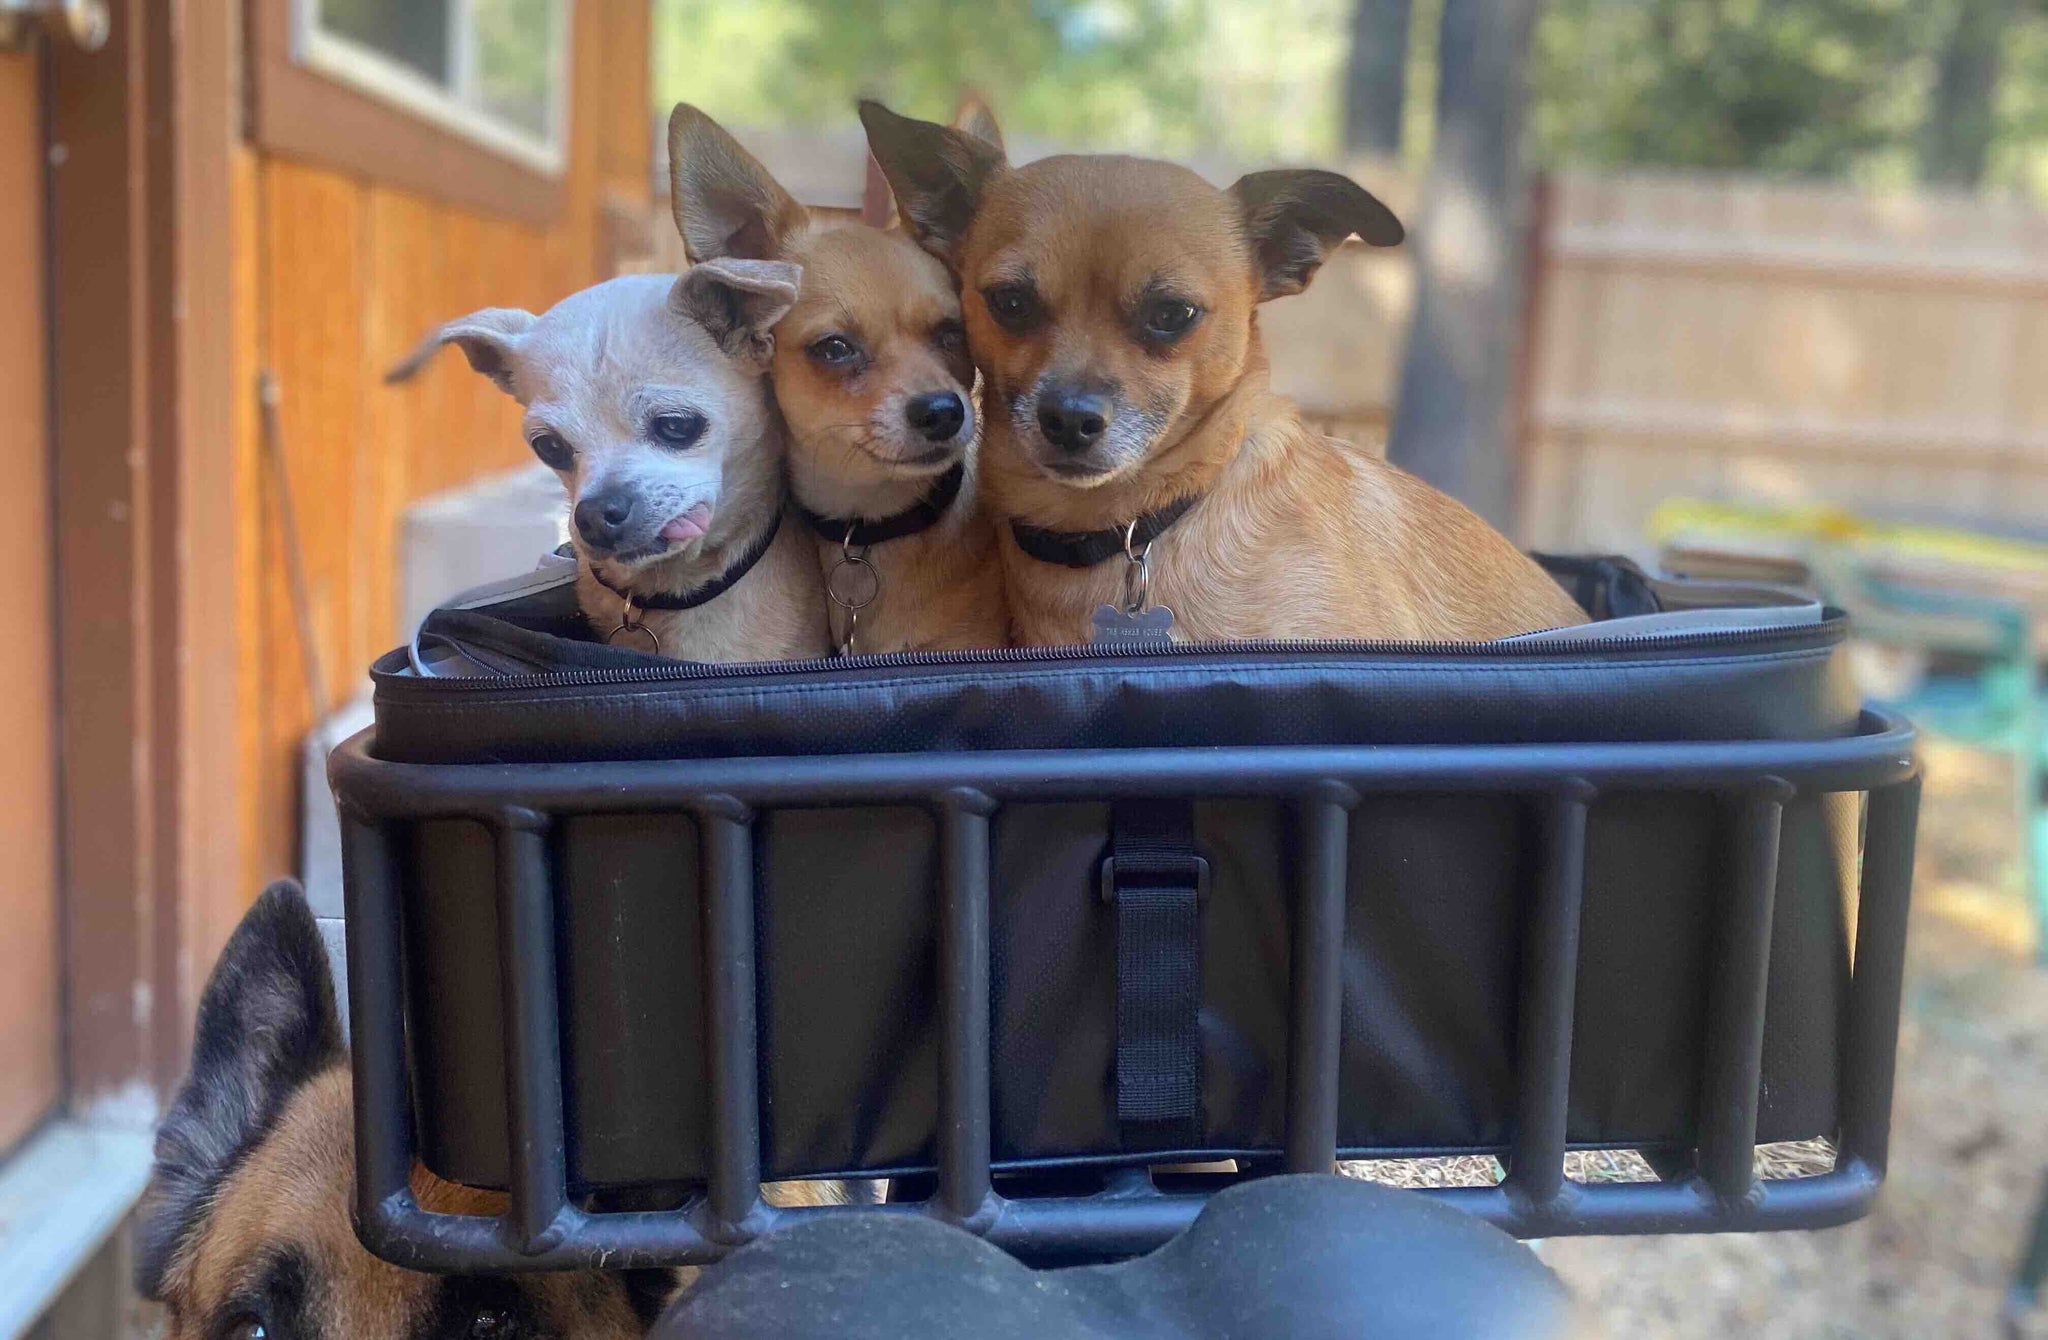 Three chihuahuas share a basket on a RadRover.